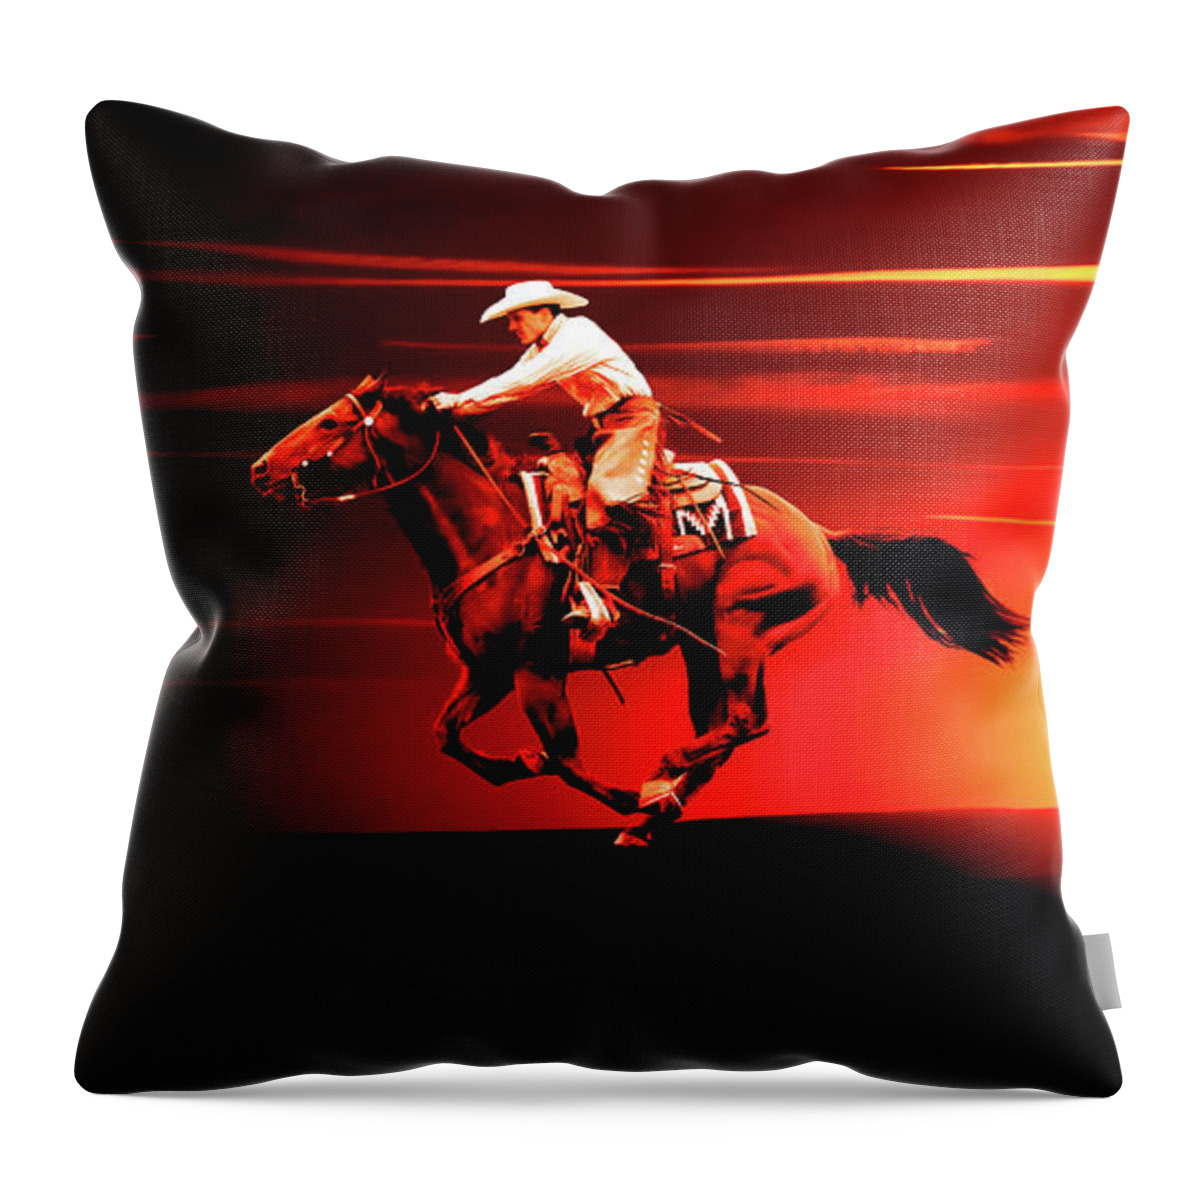 Cowboy Throw Pillow featuring the photograph Sunset Rider by Steve McKinzie